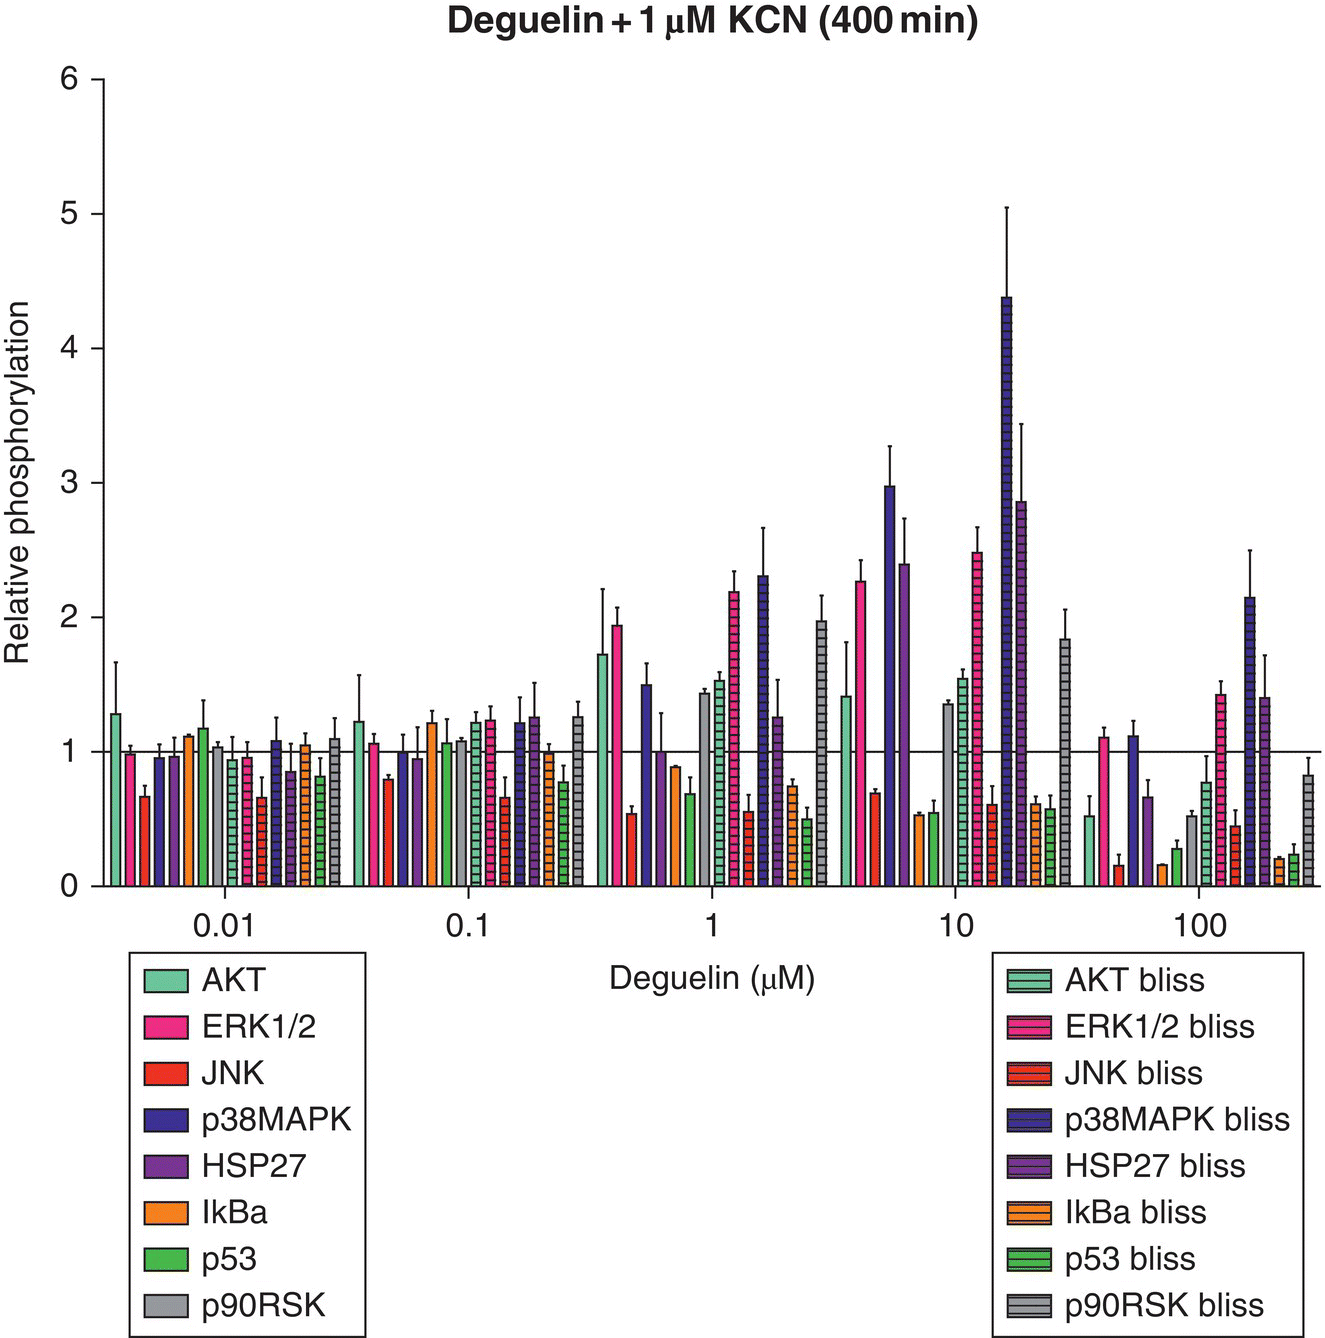 Graph for Deguelin+1μM KCN (400 min) depicting a horizontal line at 1 and vertical bars representing for AKT, ERK1/2, JNK, p38MAPK, HSP27, IkBa, p53, p90RSK, AKT bliss, ERK1/2 bliss, JNK bliss, p38MAPK bliss, etc.